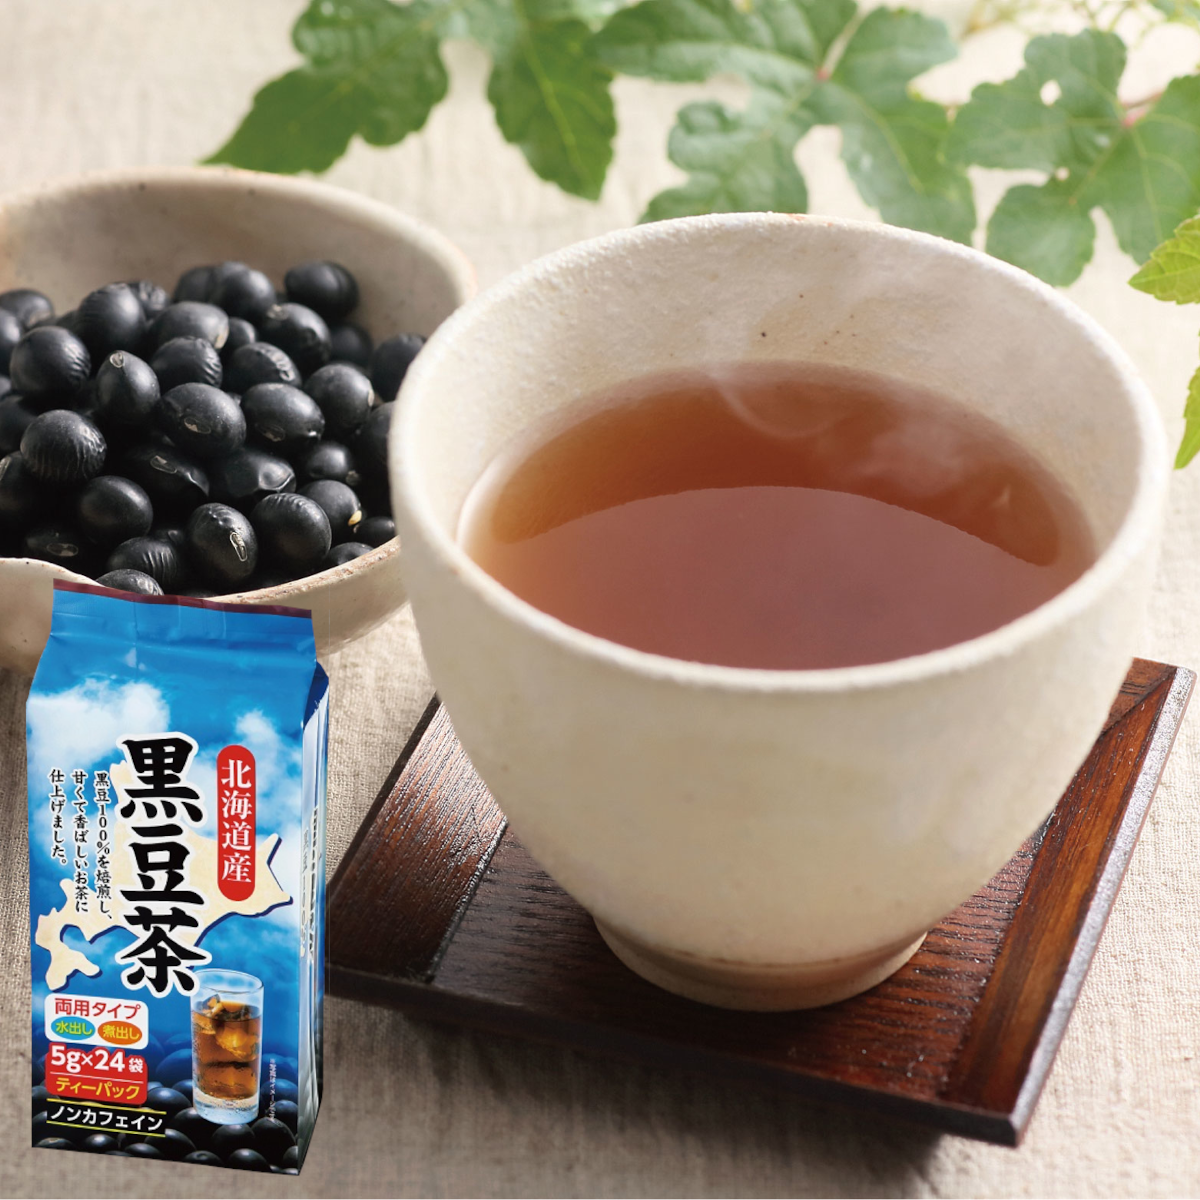 Thé de Soja Noir Kuromamecha de Hokkaido – 5 g x 24 Sachets de thé